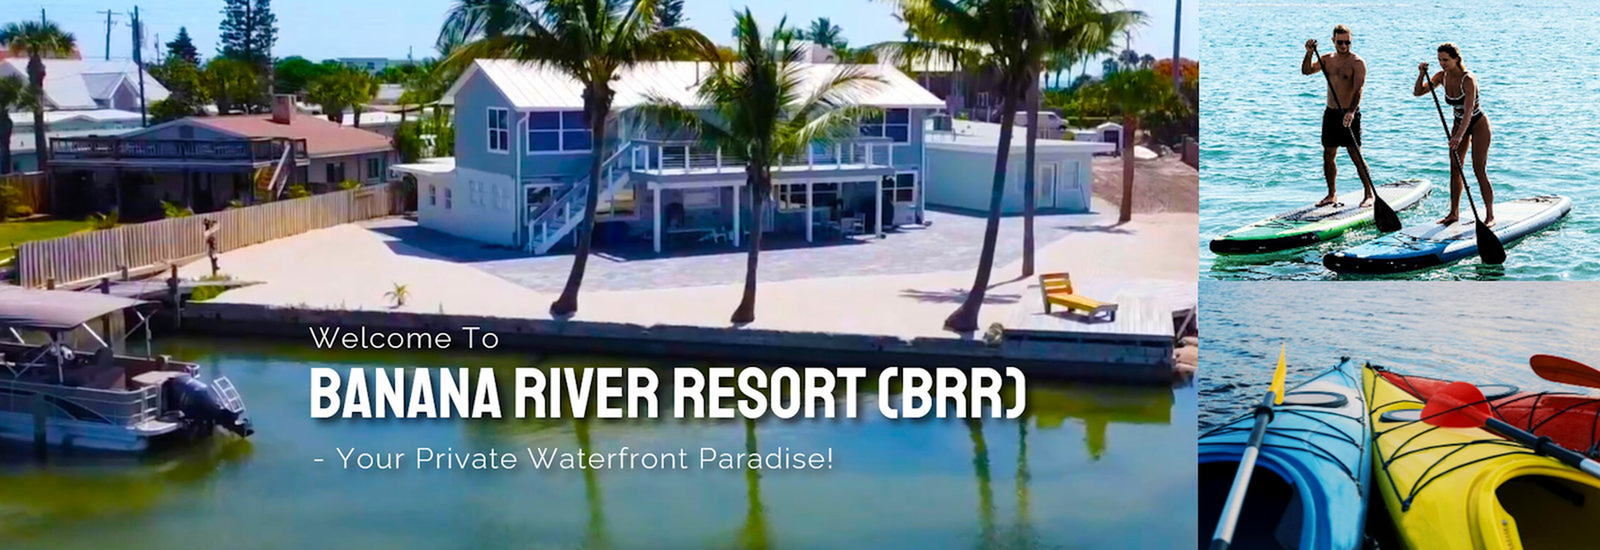 Banana River Resort in Cocoa Beach, Florida